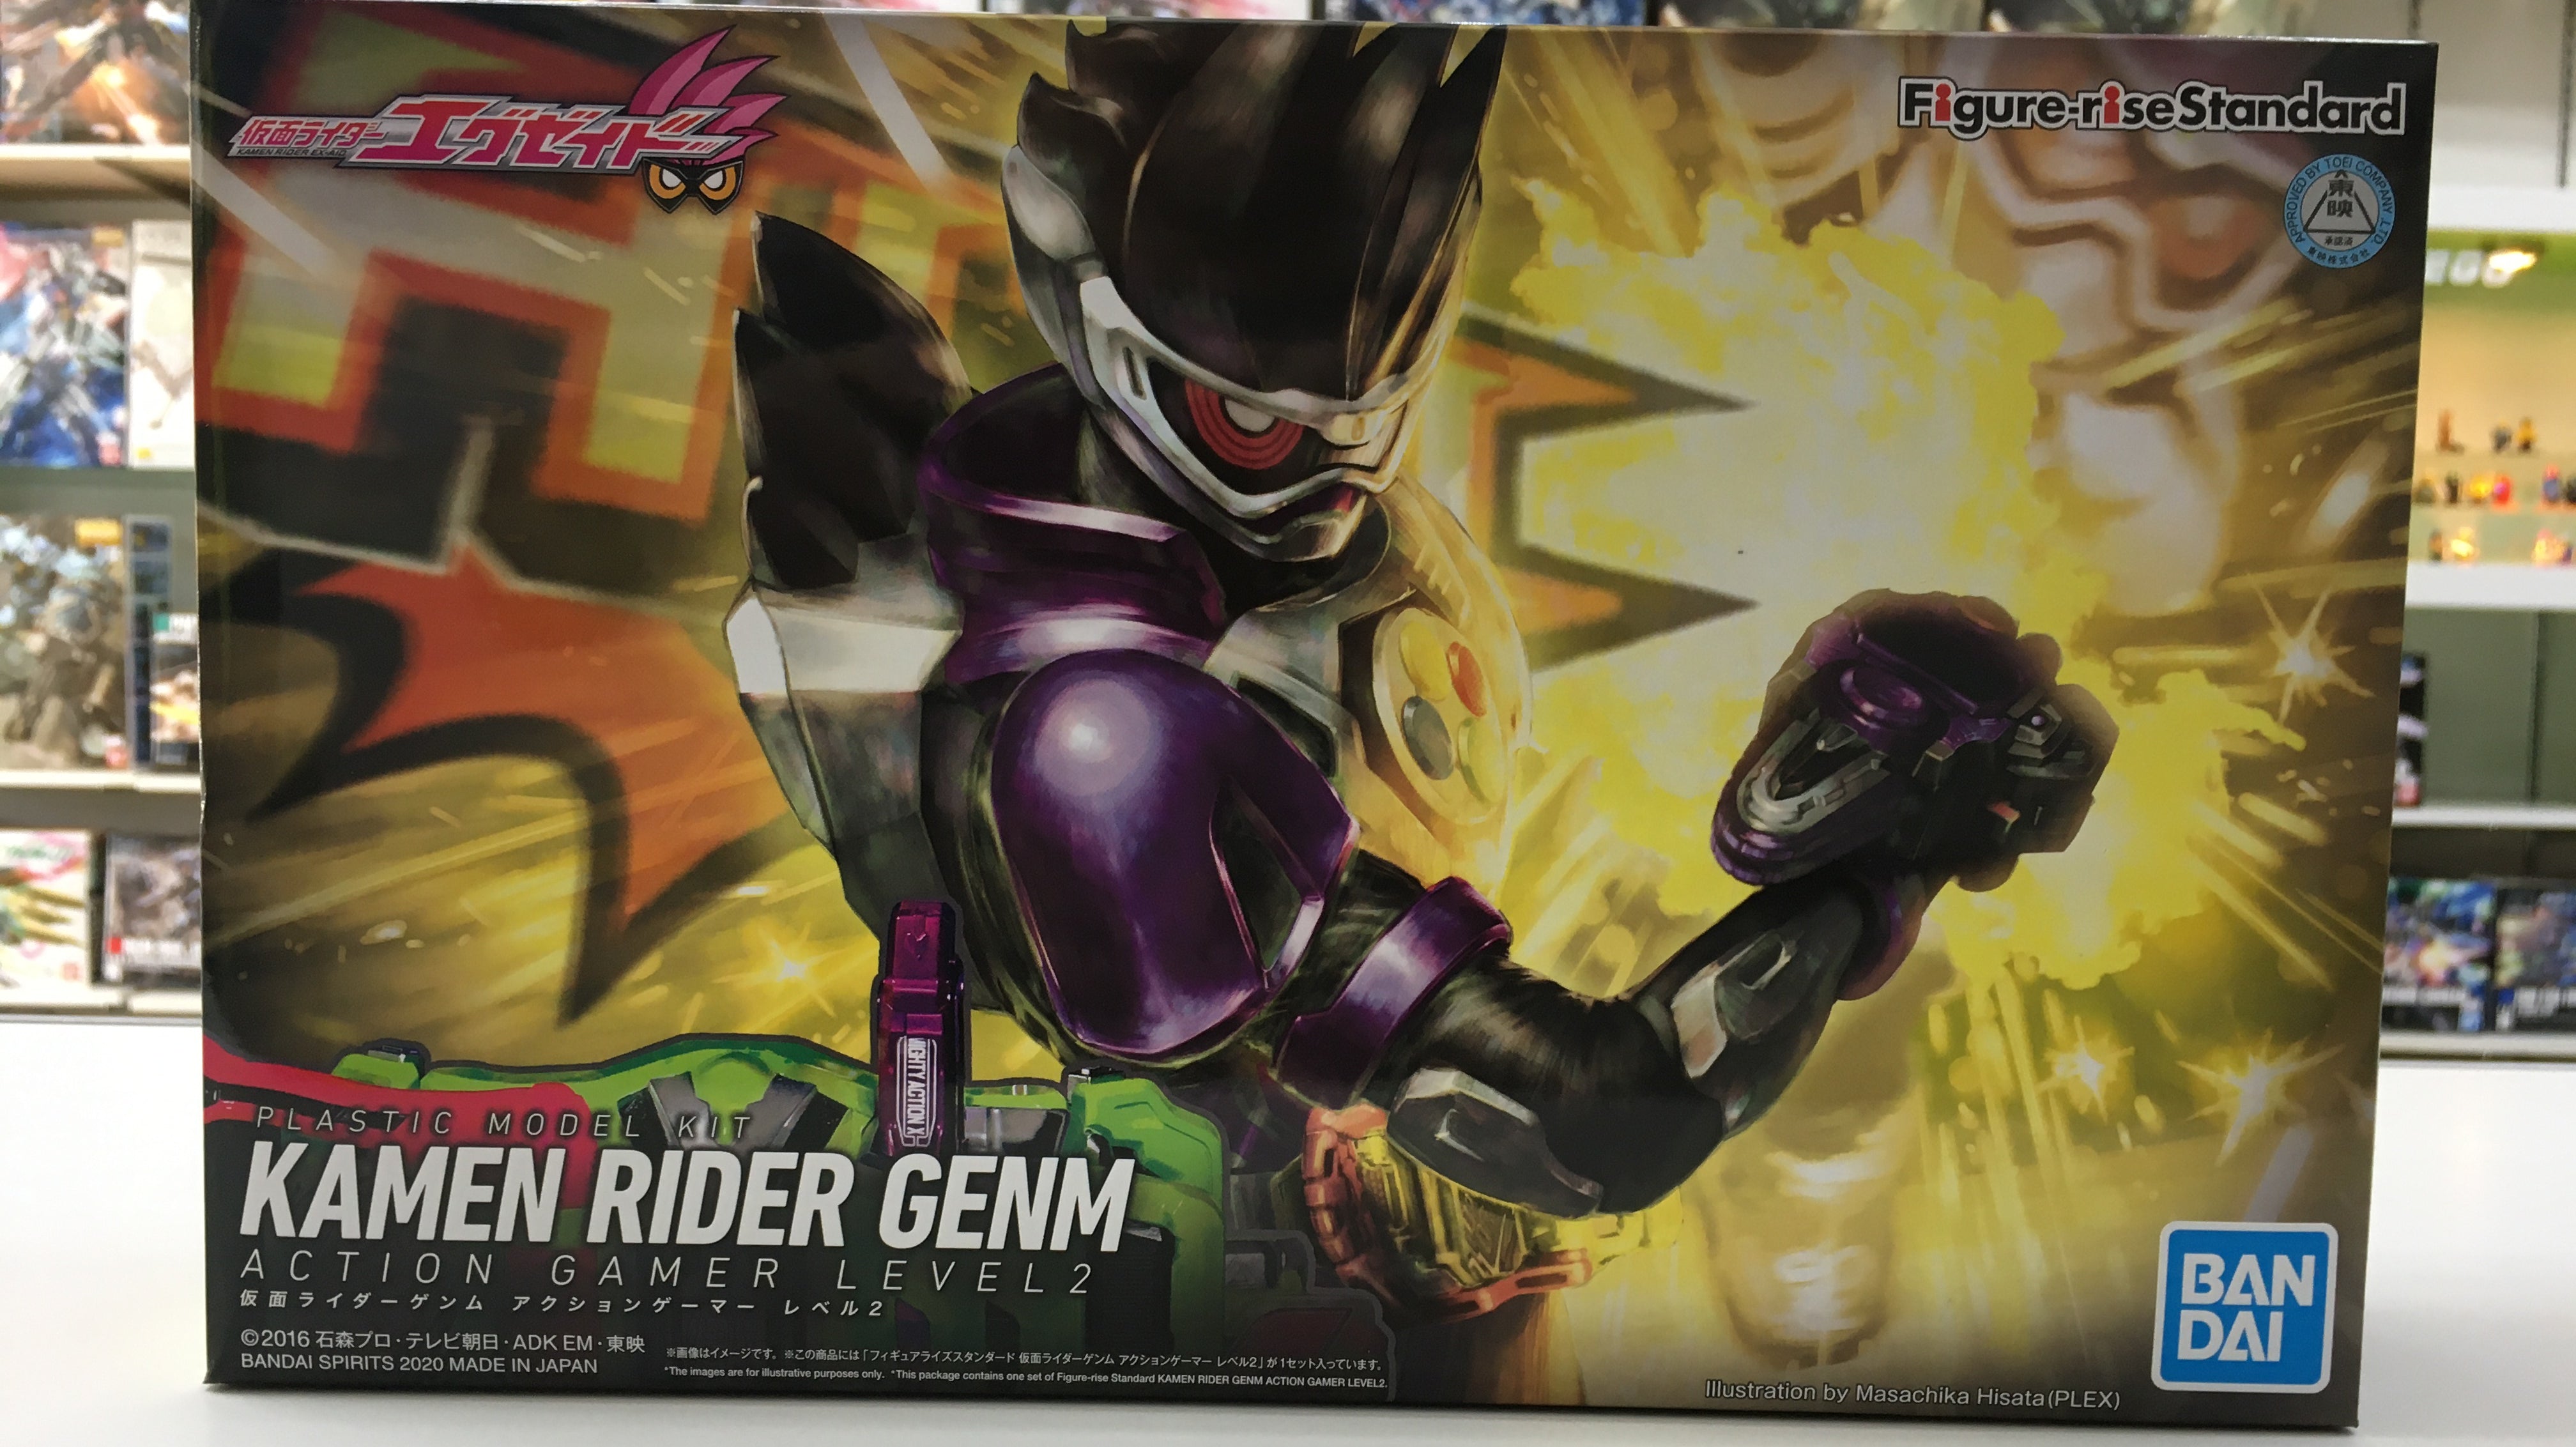 Figure-Rise Standard Kamen Rider GENM Action Gamer Level 2